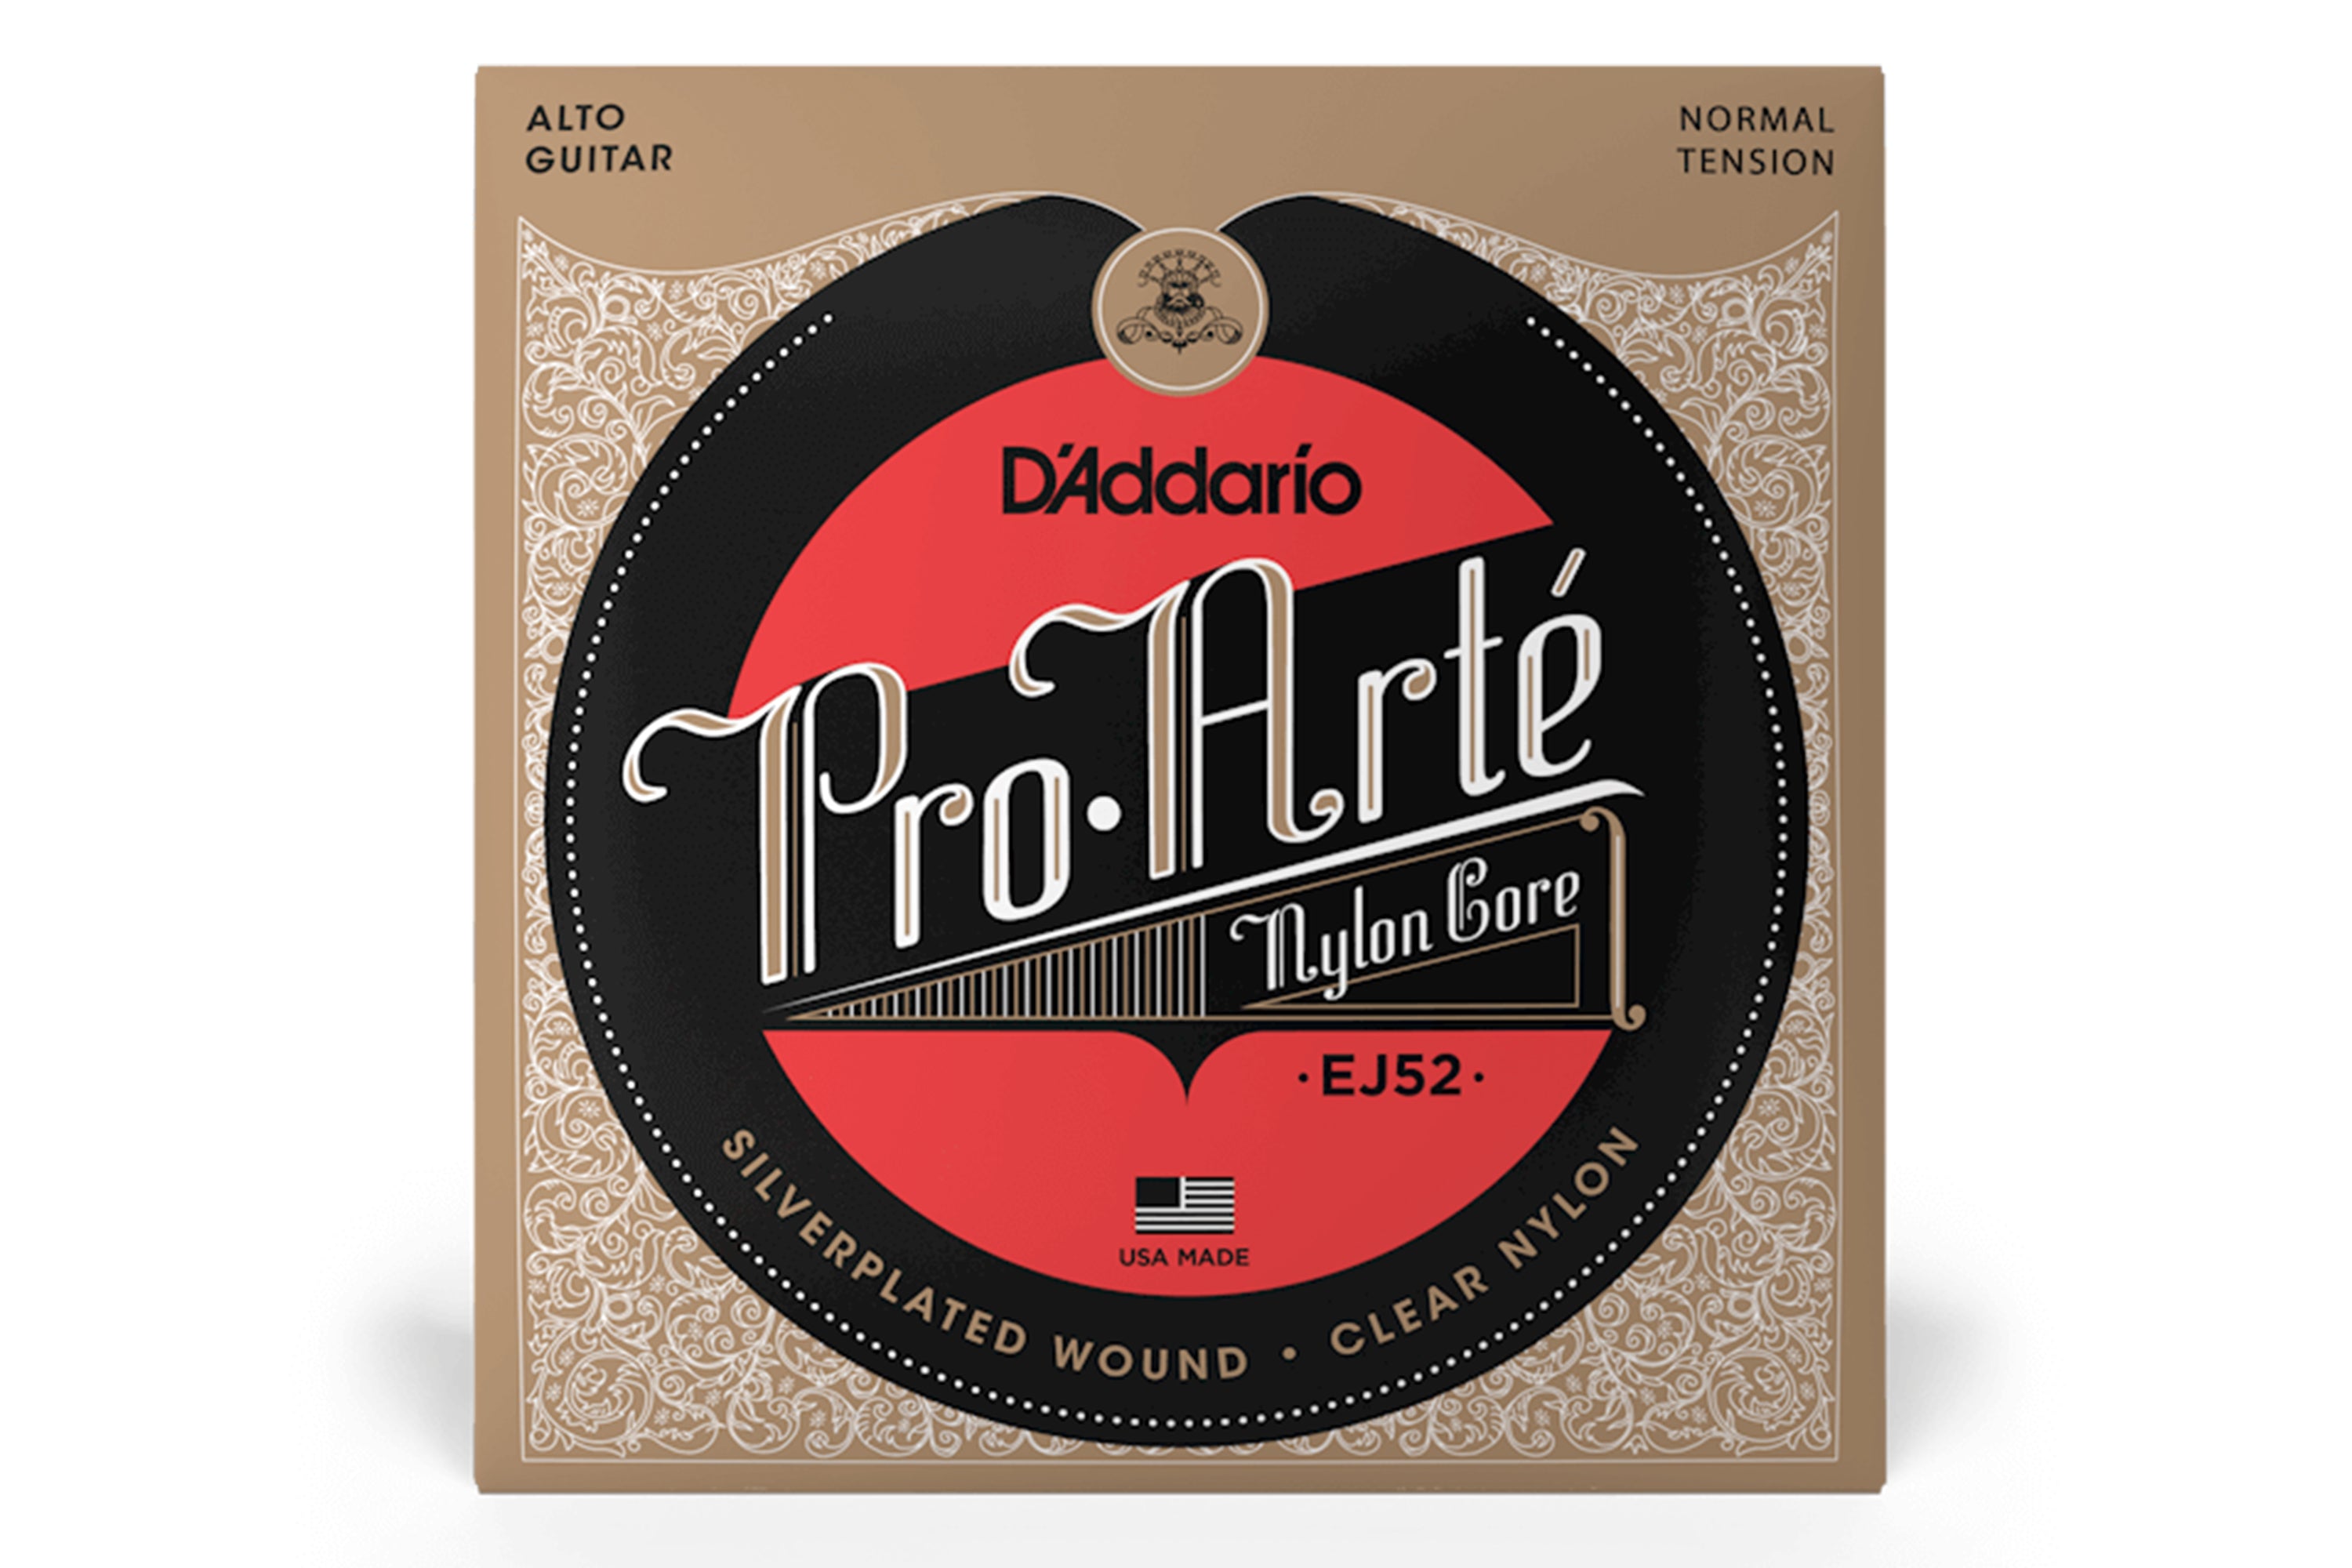 D'Addario EJ52 Pro-Arte Classical Alto Guitar Strings - Normal Tension